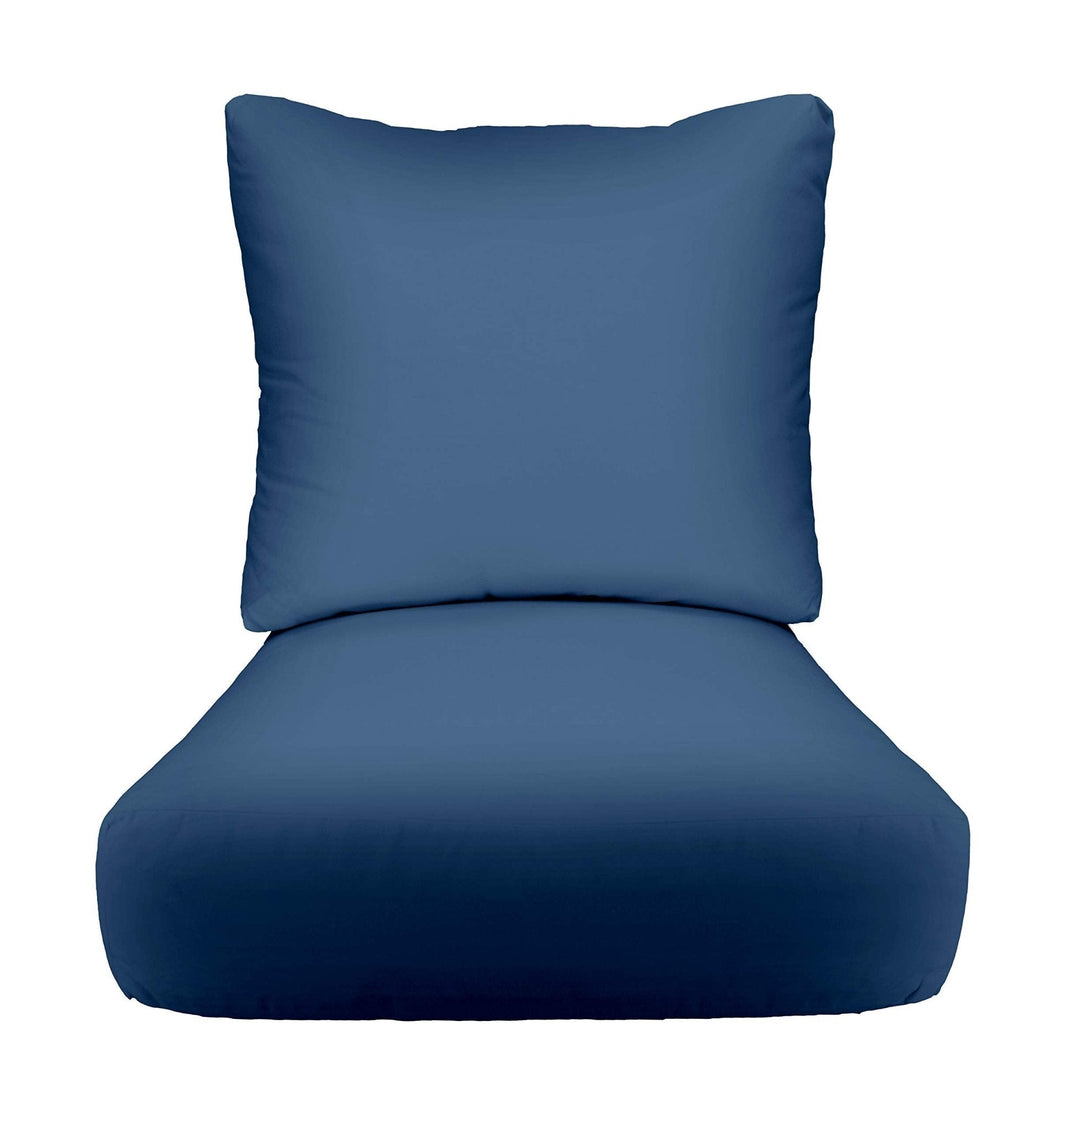 Deep Seating Pillow Back Chair Cushion Set | Sunbrella Performance Fabric | Sunbrella Canvas Capri Blue - RSH Decor